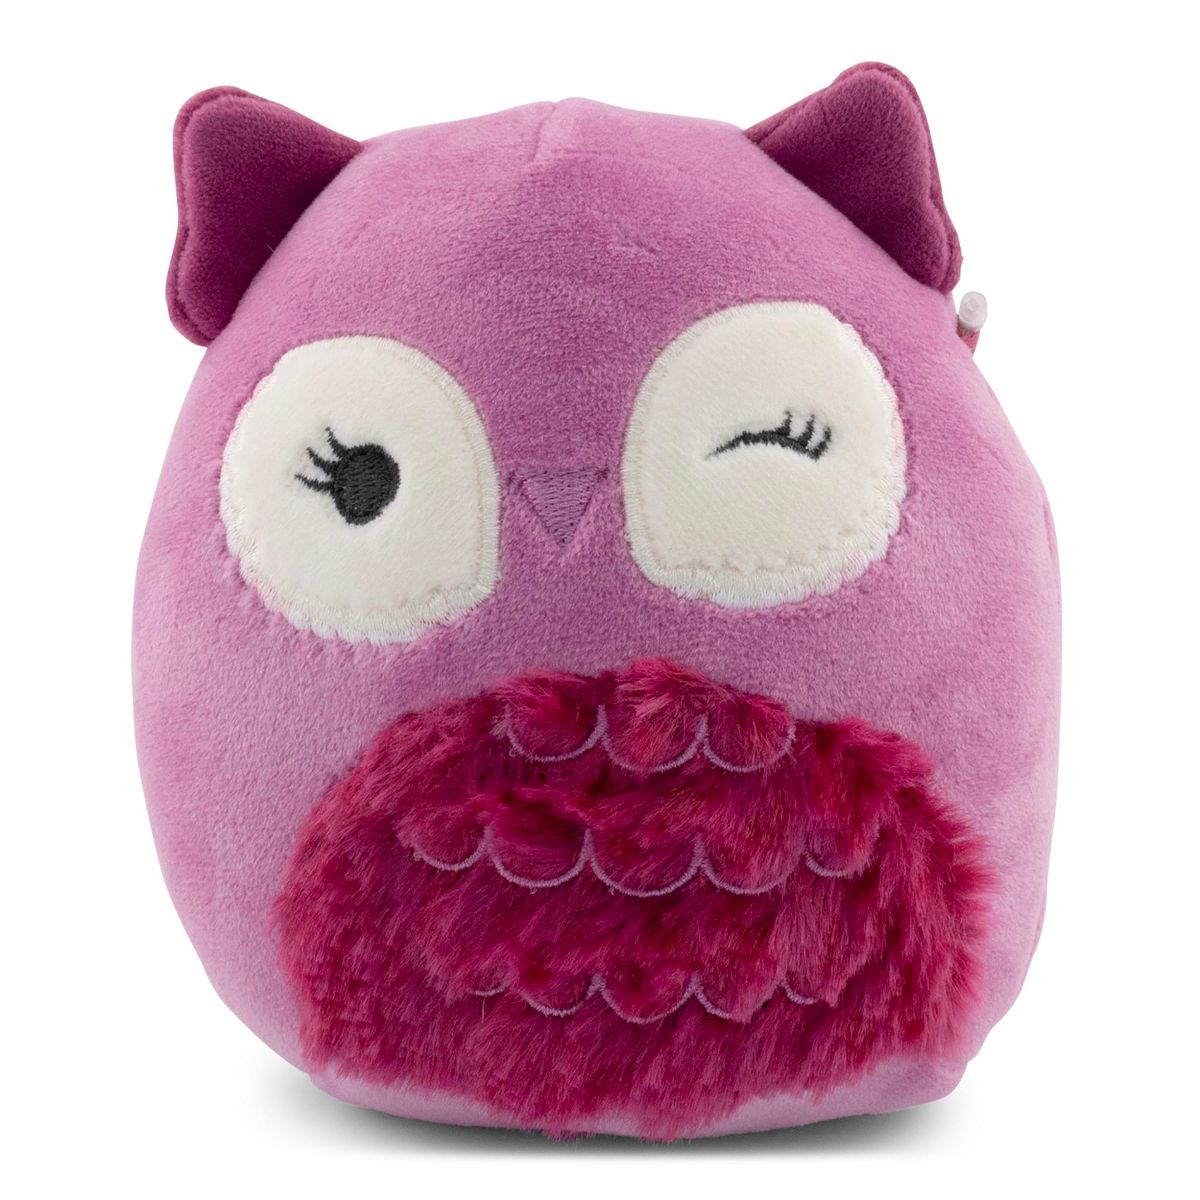 Aurura the Owl 5” Squishmallow - Cozy Assortment